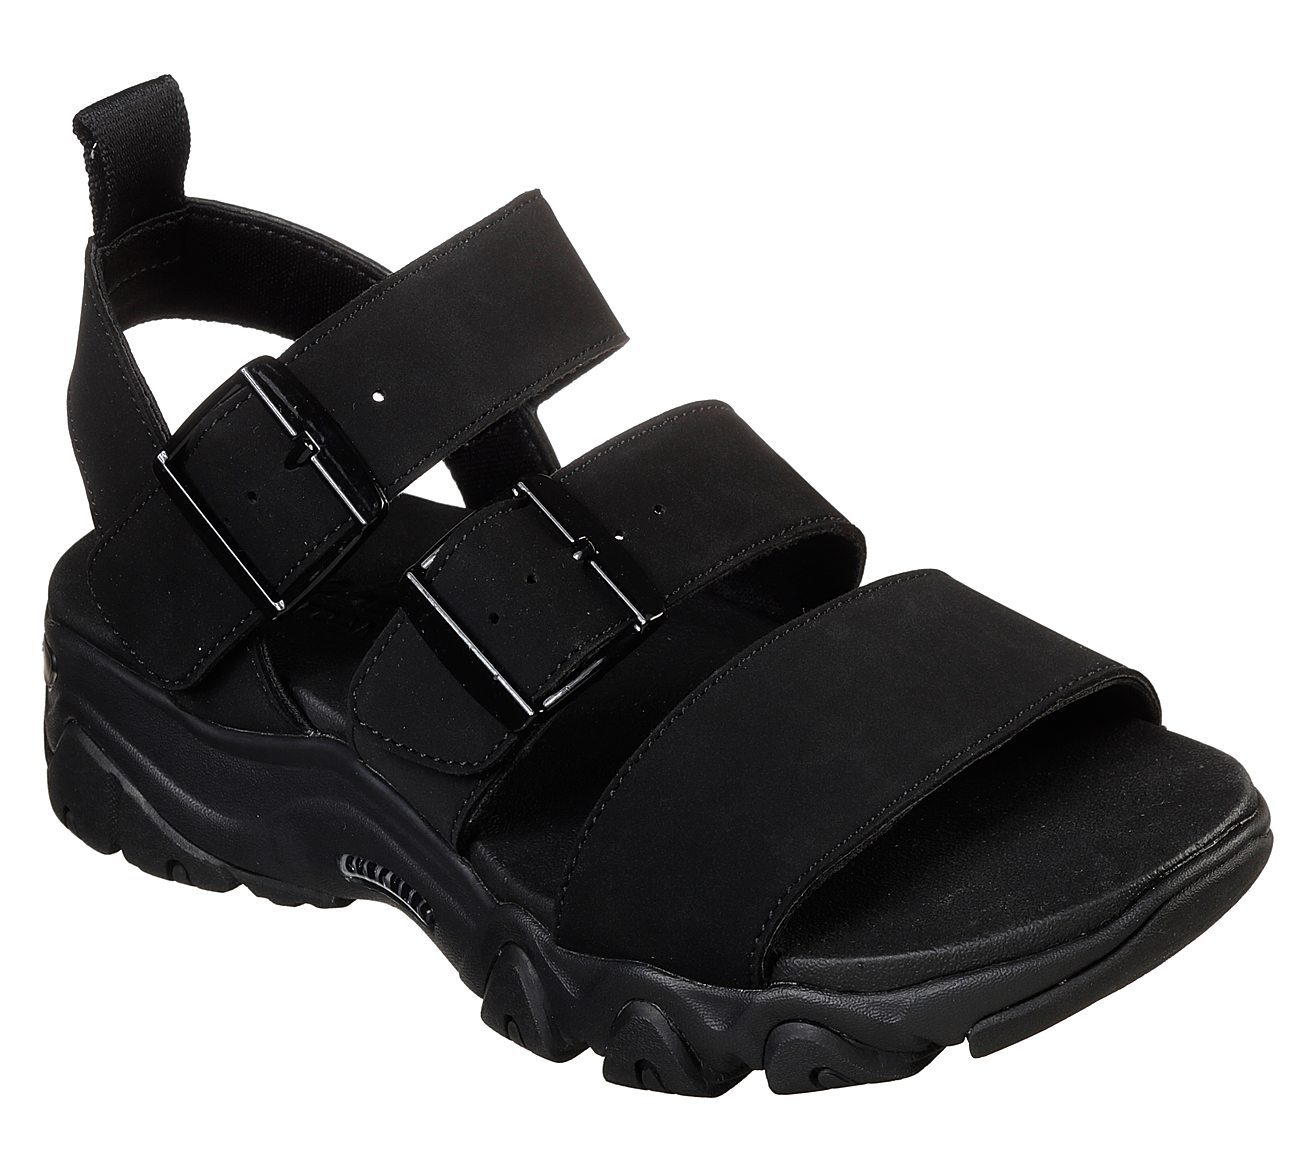 cool black sandals